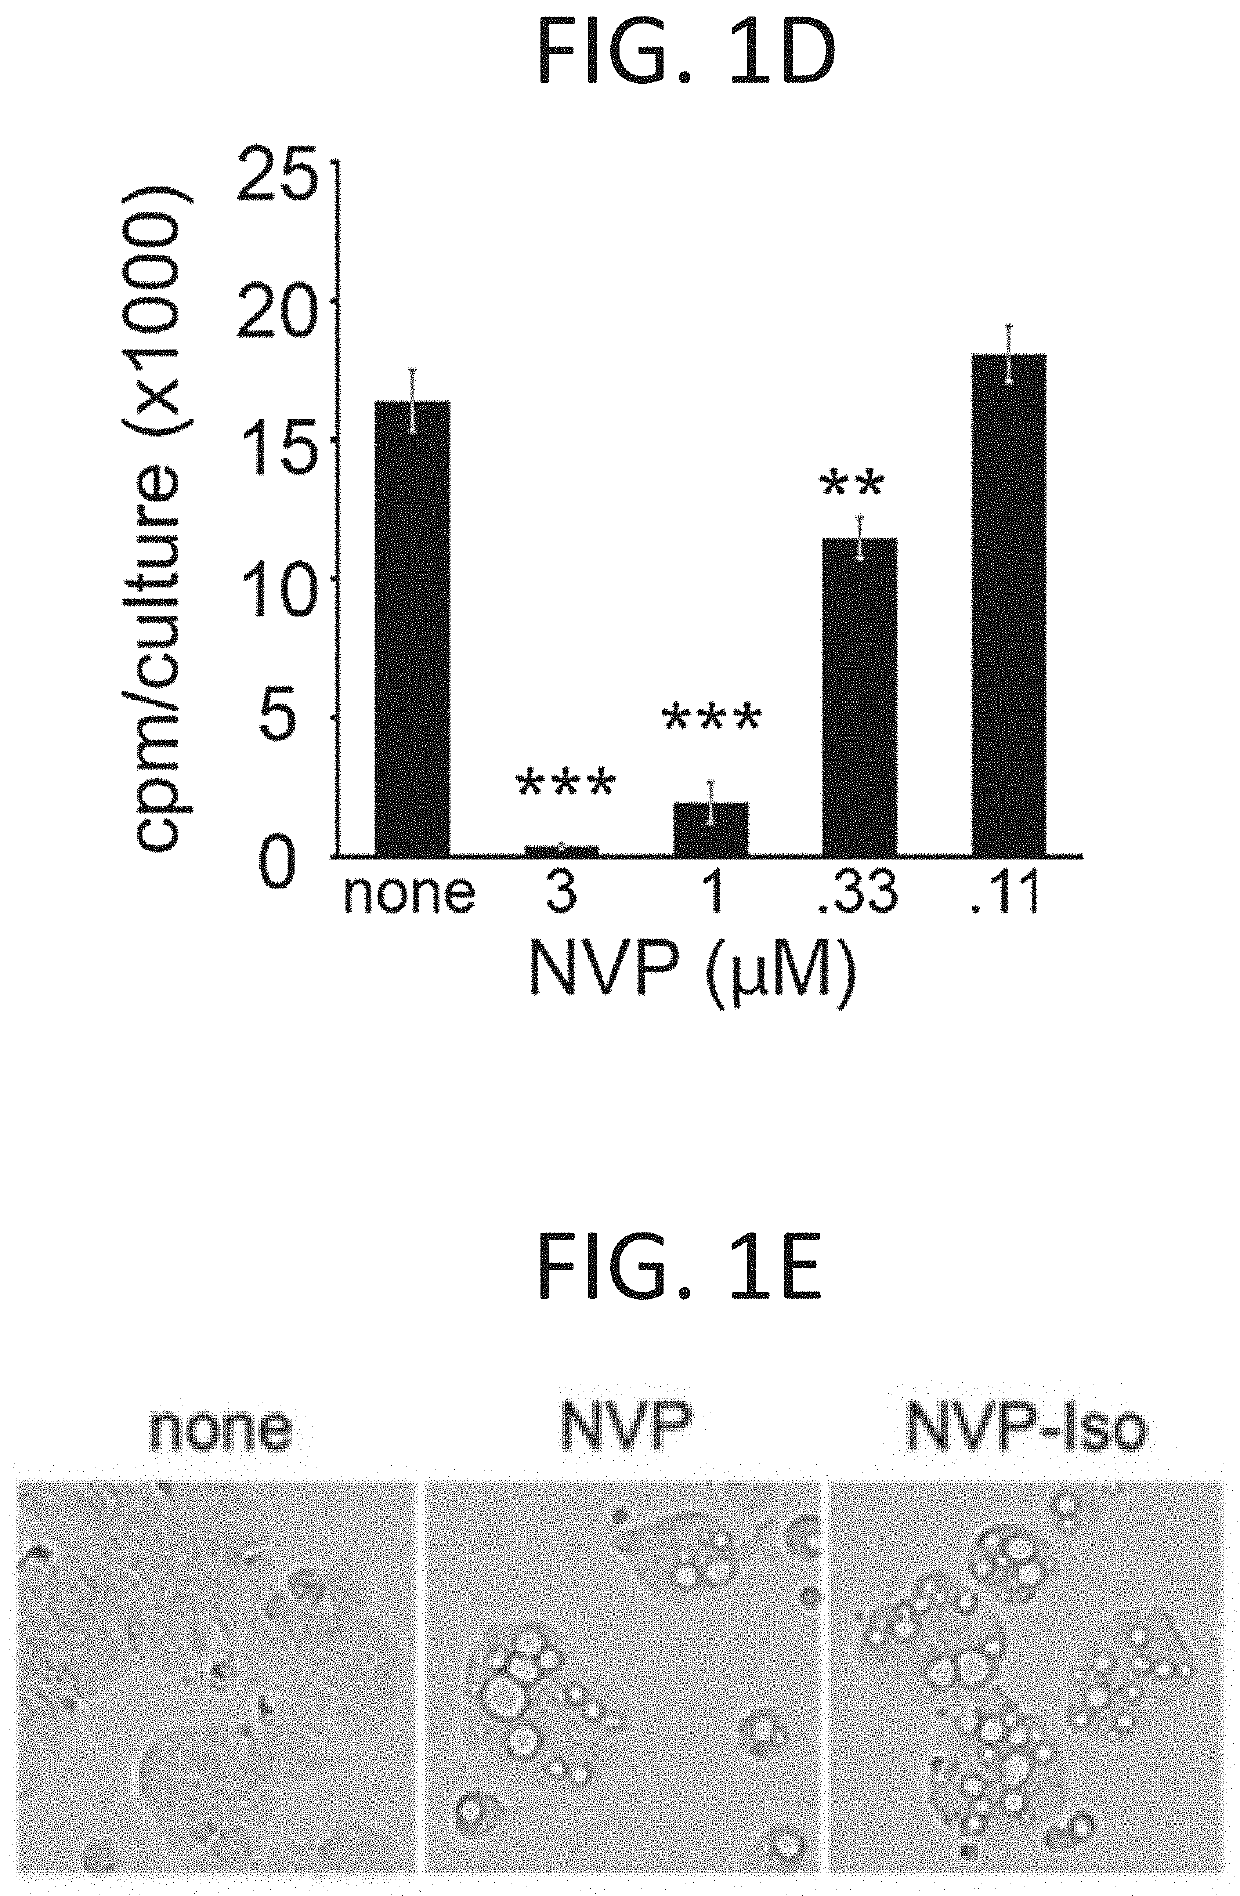 Receptor tyrosine kinase inhibitors for treatment of protein kinase modulation-responsive disease or disorder